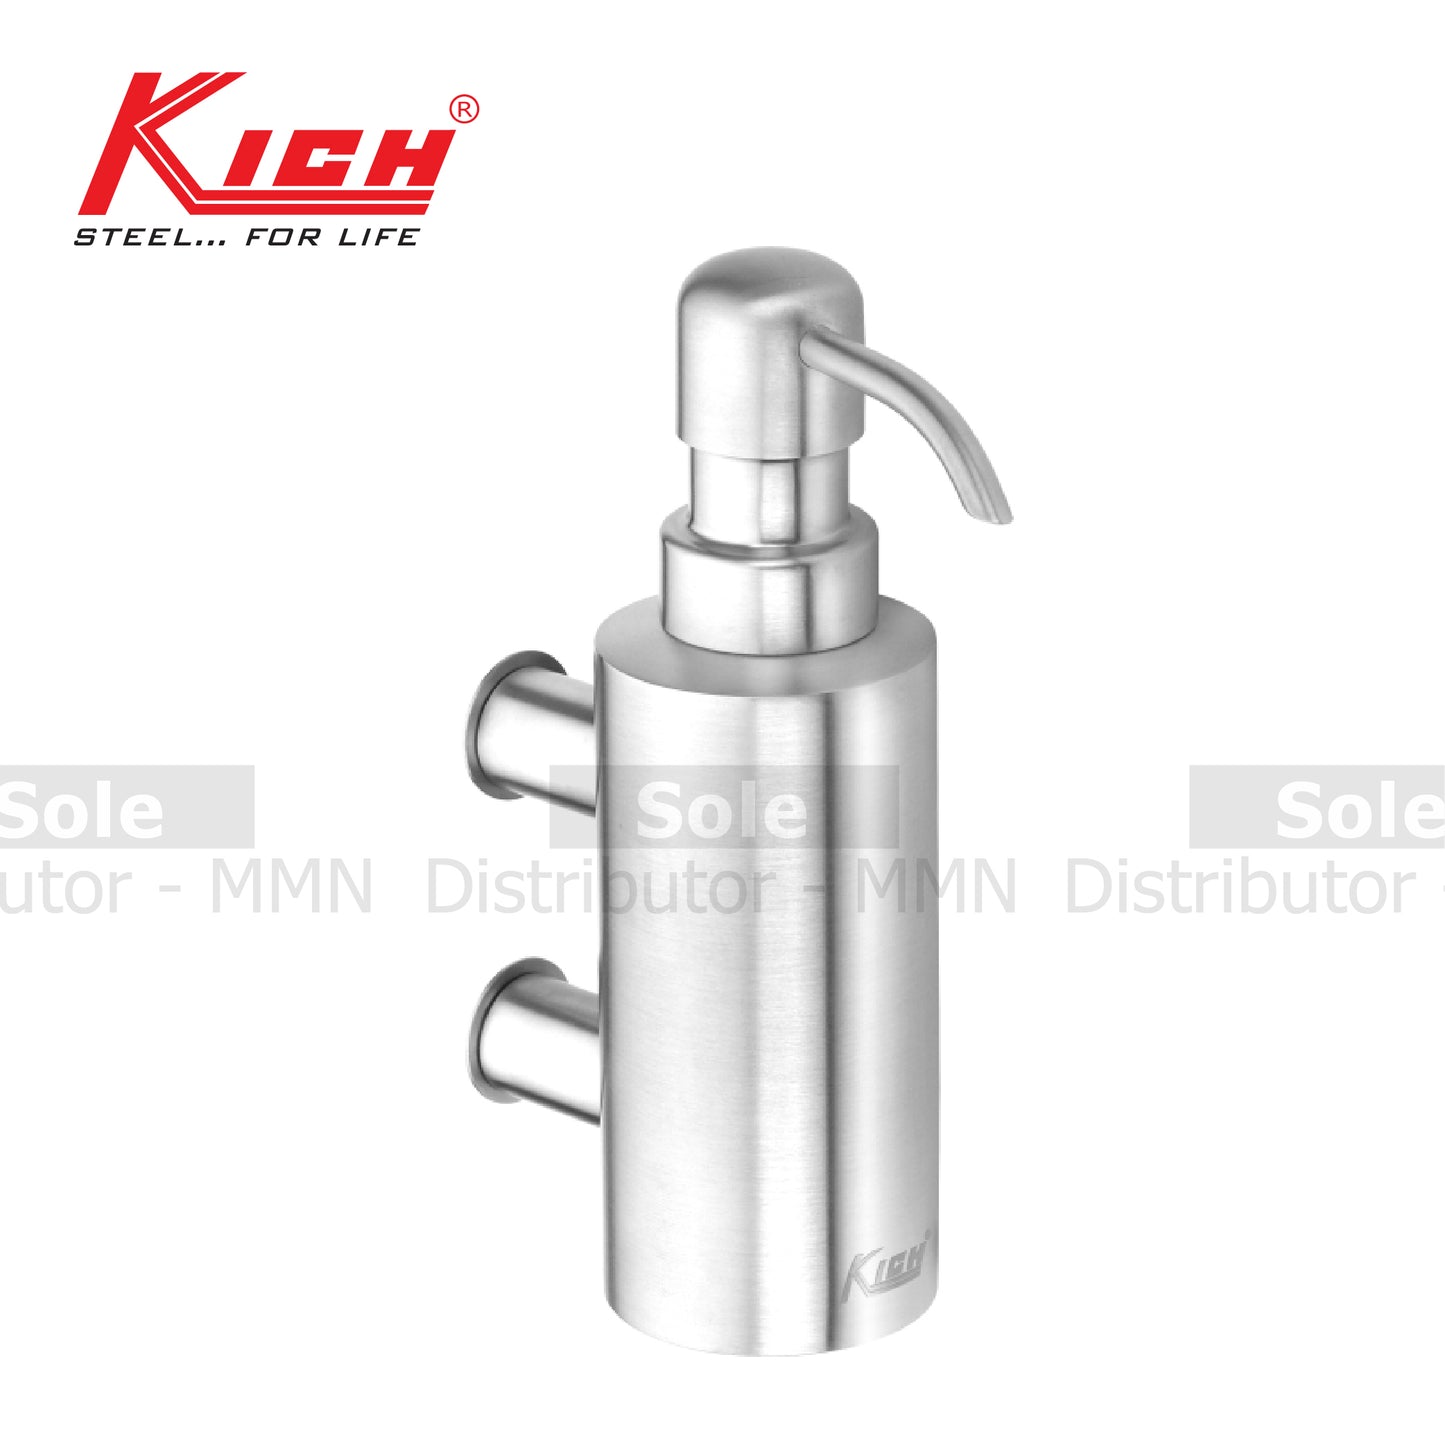 Kich Wall Mounted Round Shape Liquid Soap Dispenser Wall Mounted, Capacity 200ml, Stainless Steel 316 Grade - KTLSD2WMS